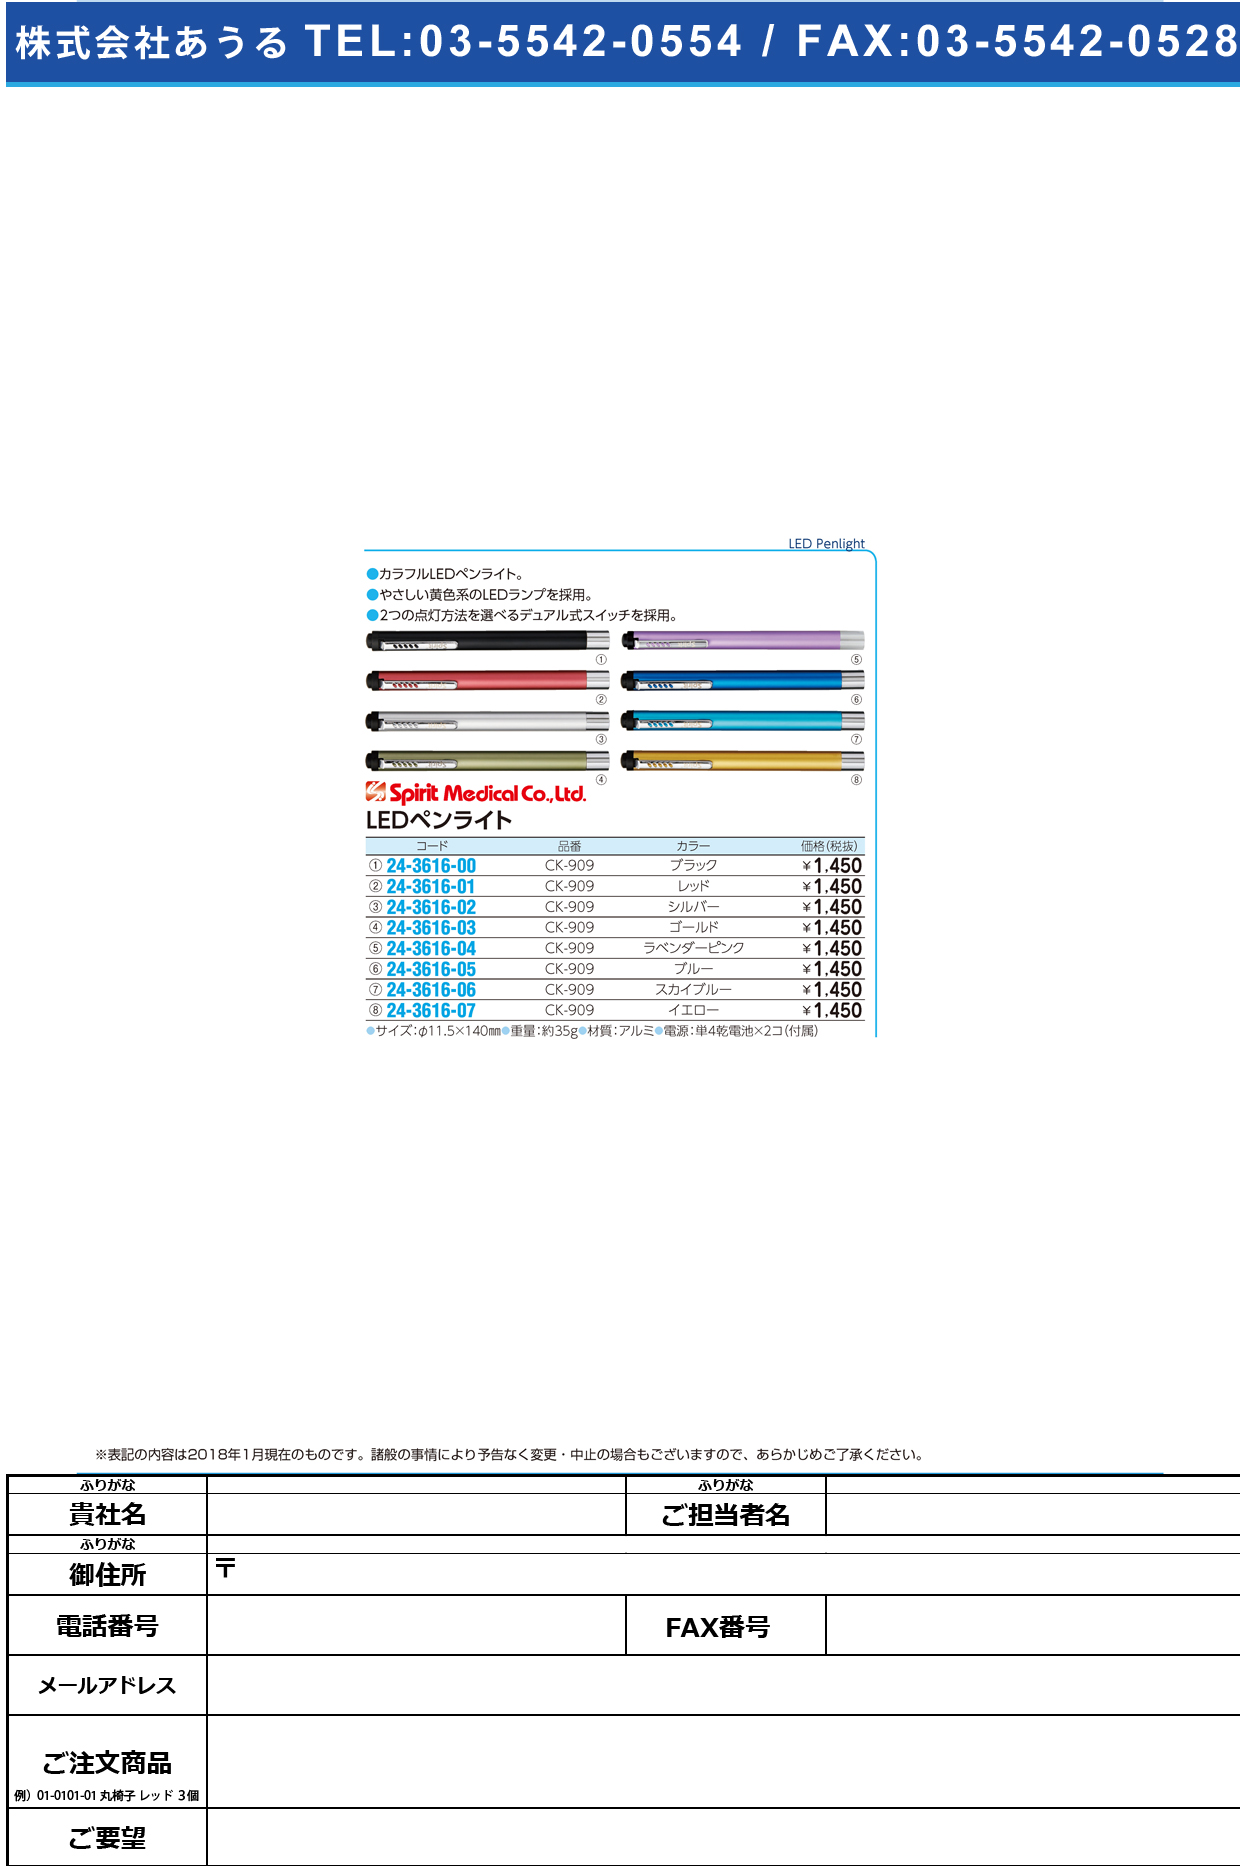 (24-3616-00)ＳｐｉｒｉｔＬＥＤペンライト CK-909(ﾌﾞﾗｯｸ) SPIRITLEDﾍﾟﾝﾗｲﾄ(スピリット・メディカル社)【1台単位】【2019年カタログ商品】